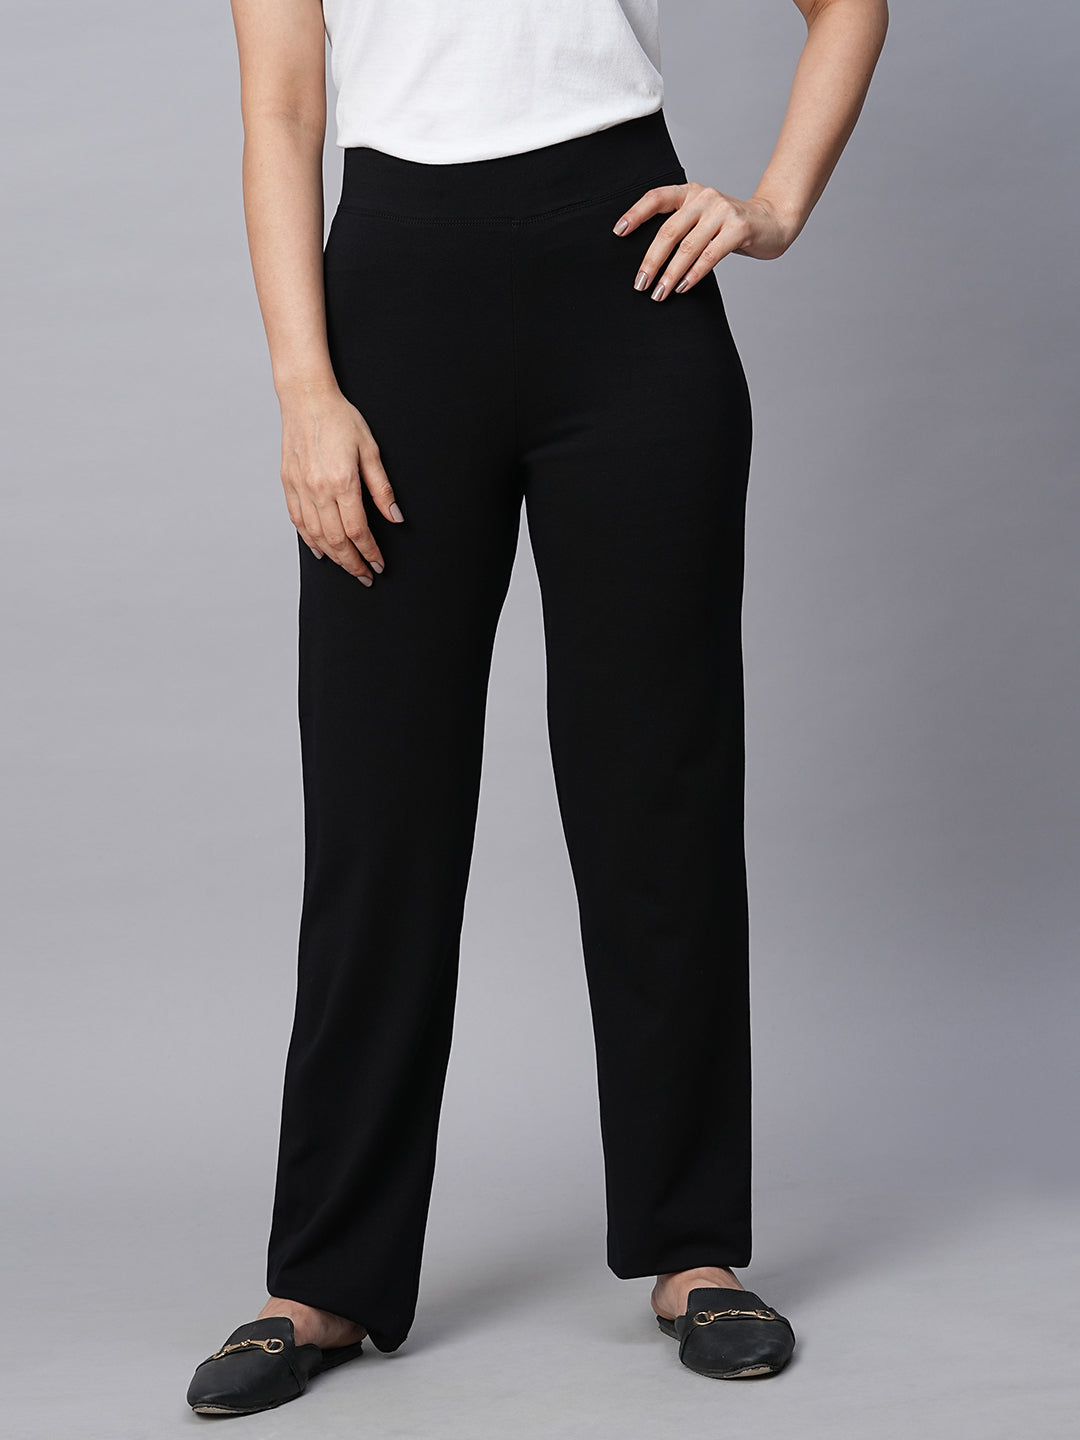 Women's Cotton Elastane Black Regular Fit Kpant